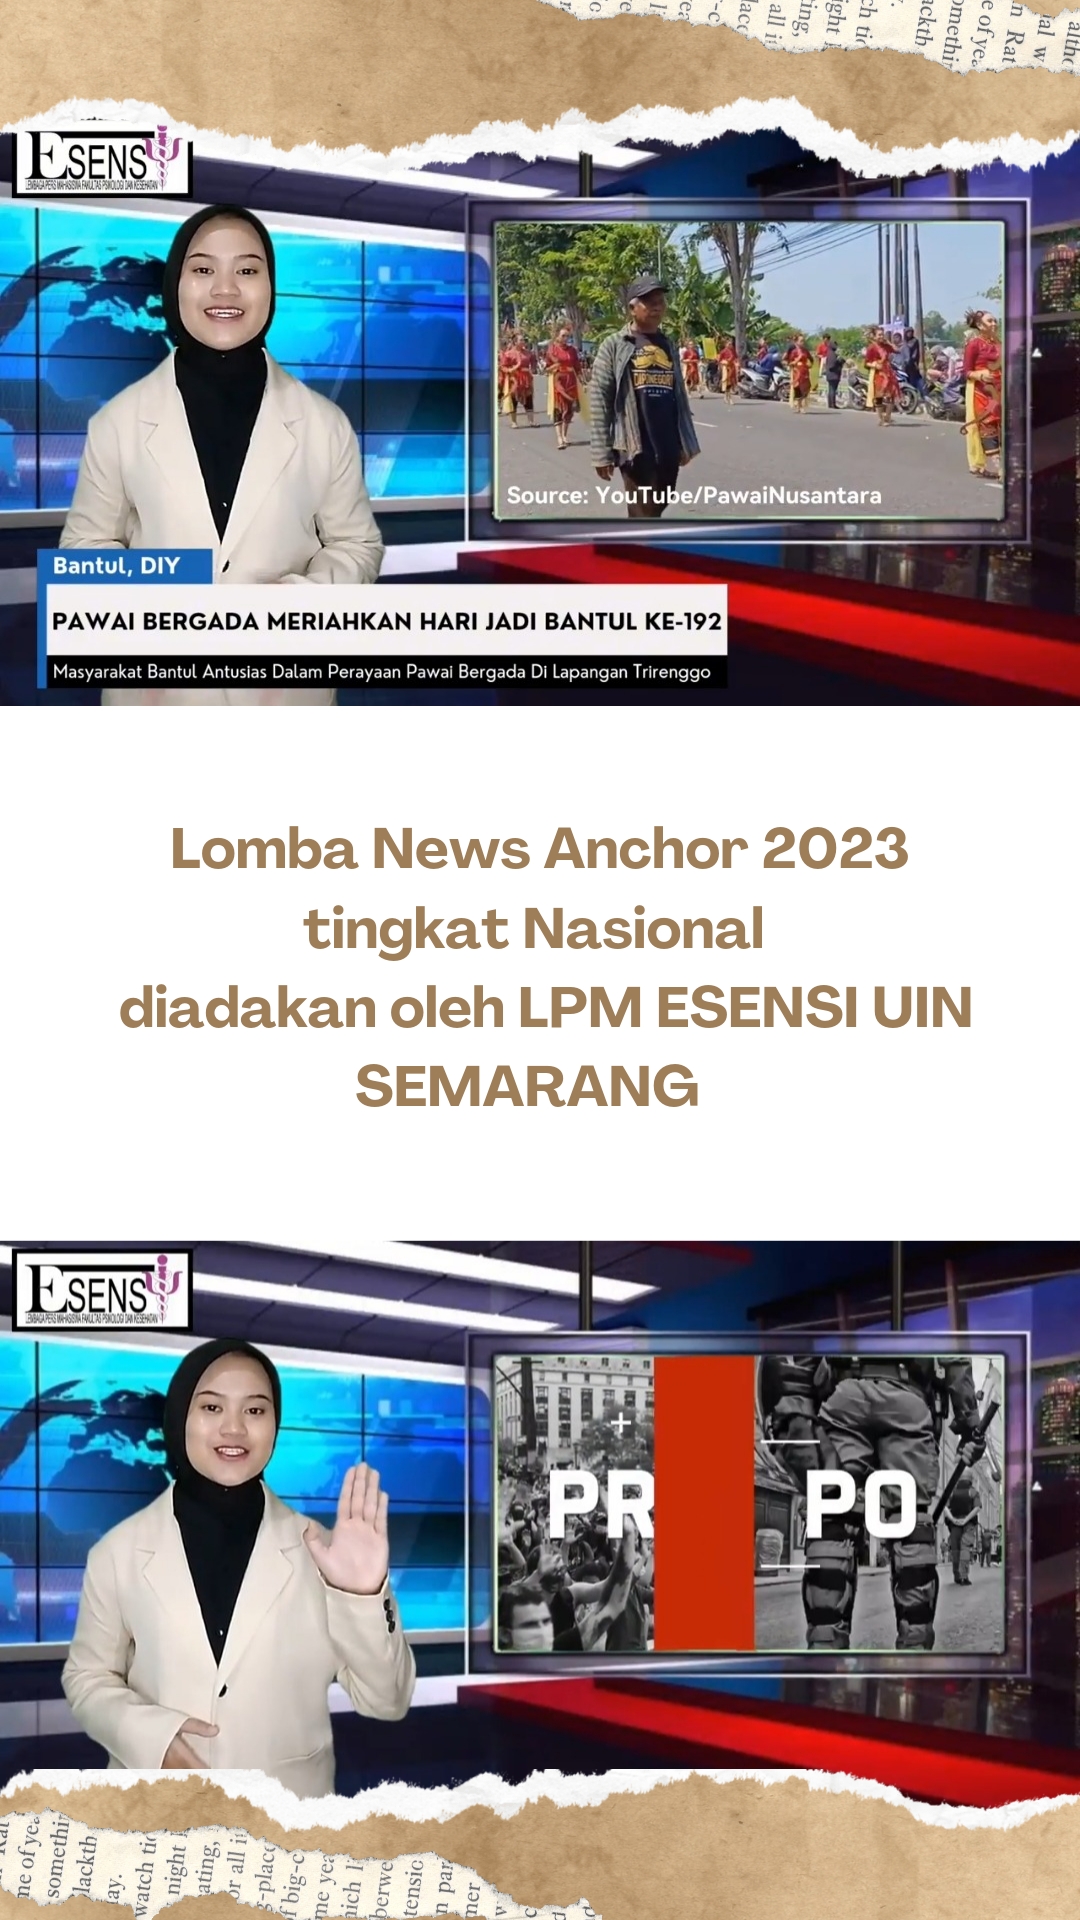 Foto Lomba News Anchor LPM Esensi UIN Semarang 2023